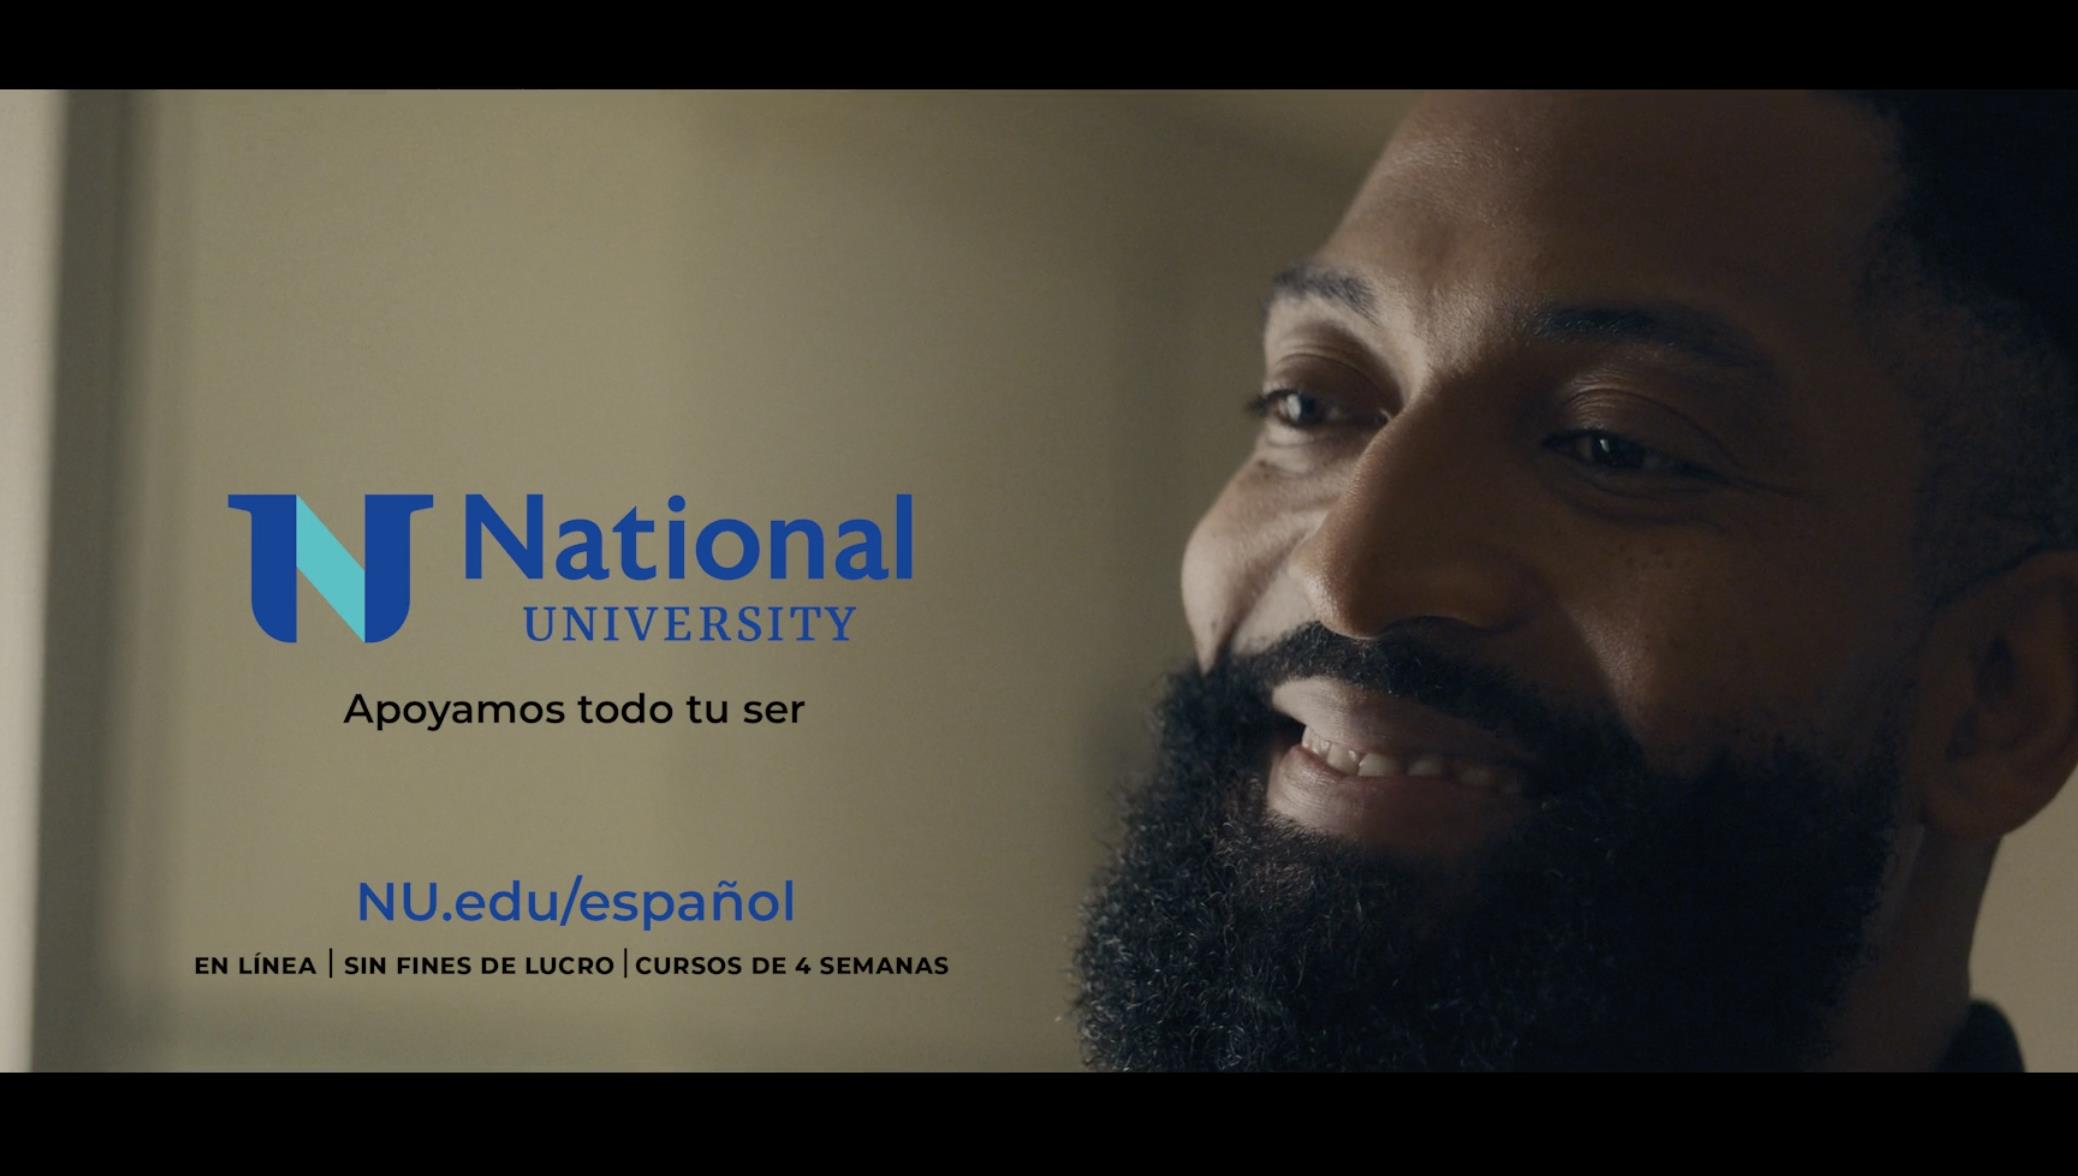 National University "Titles" — Spanish